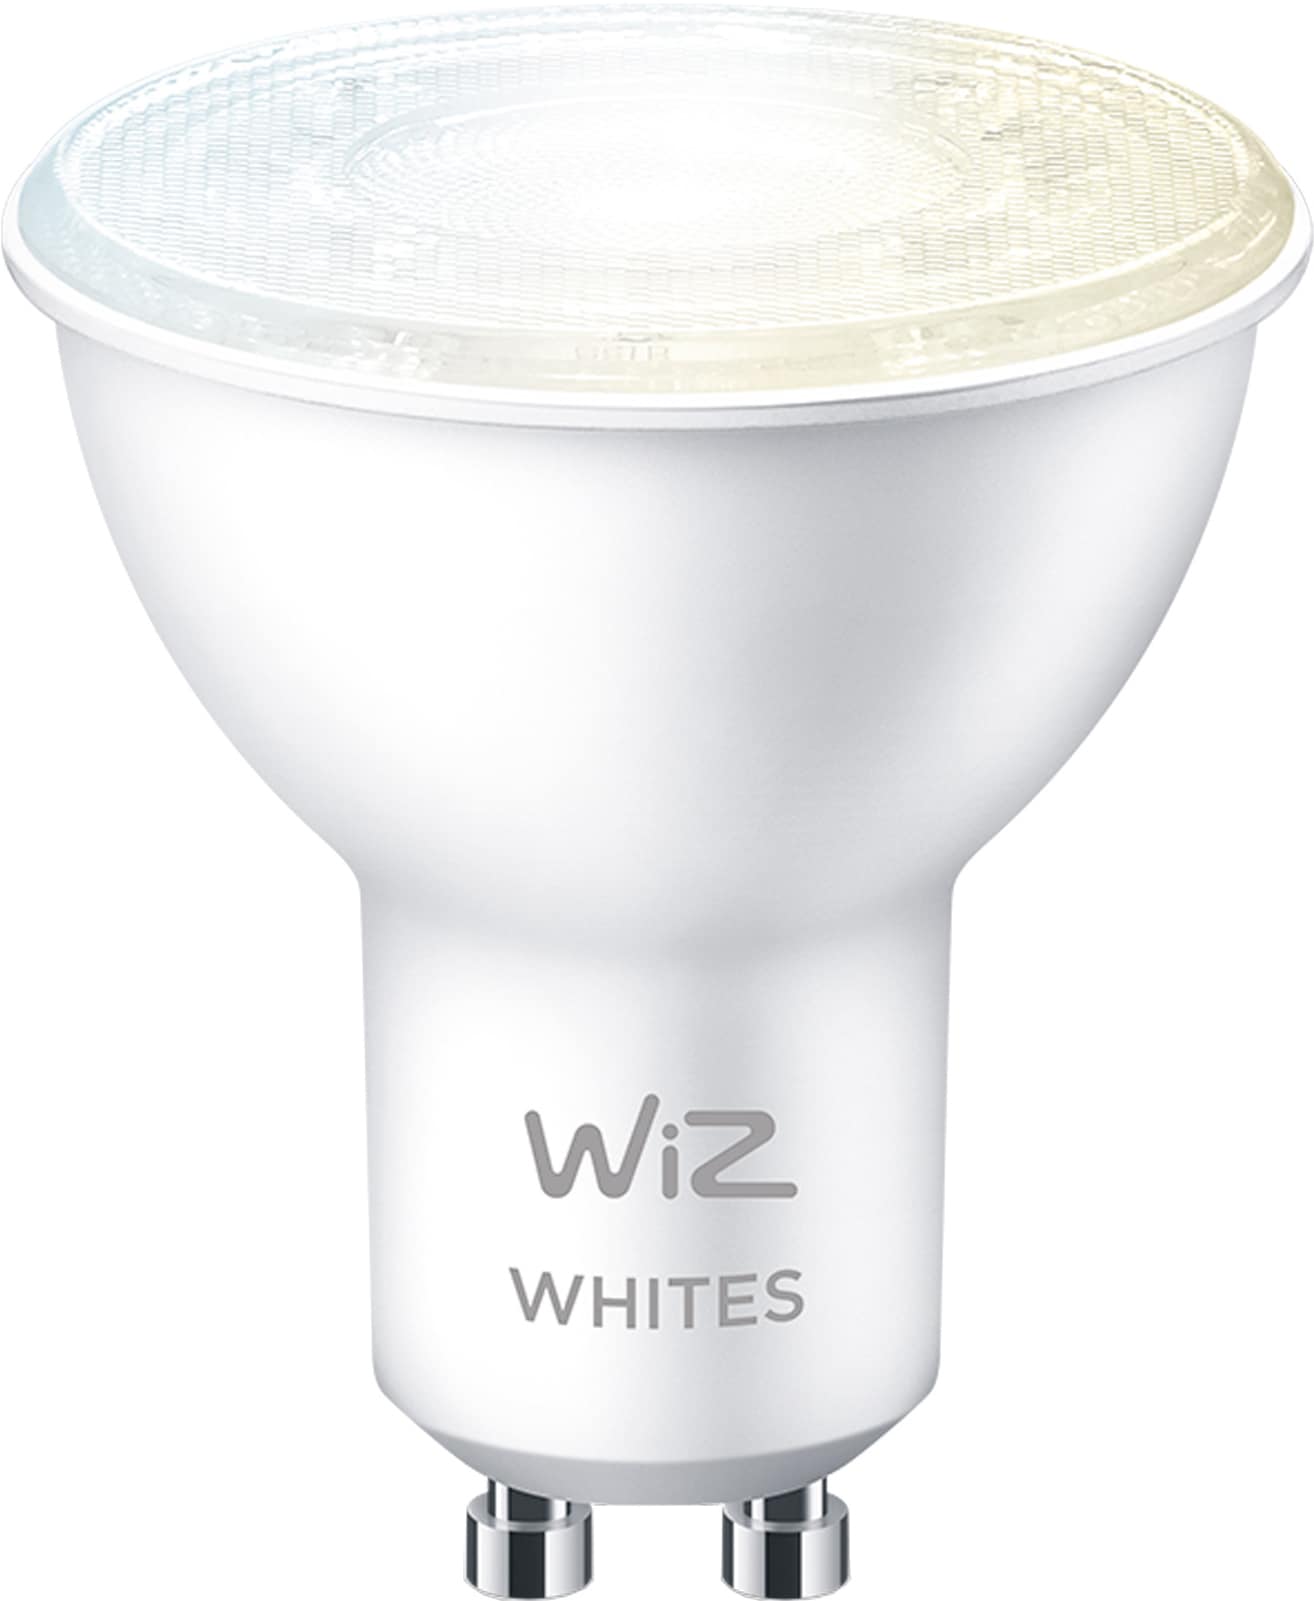 Wiz  Light LED spot 50W GU10 871869978711000